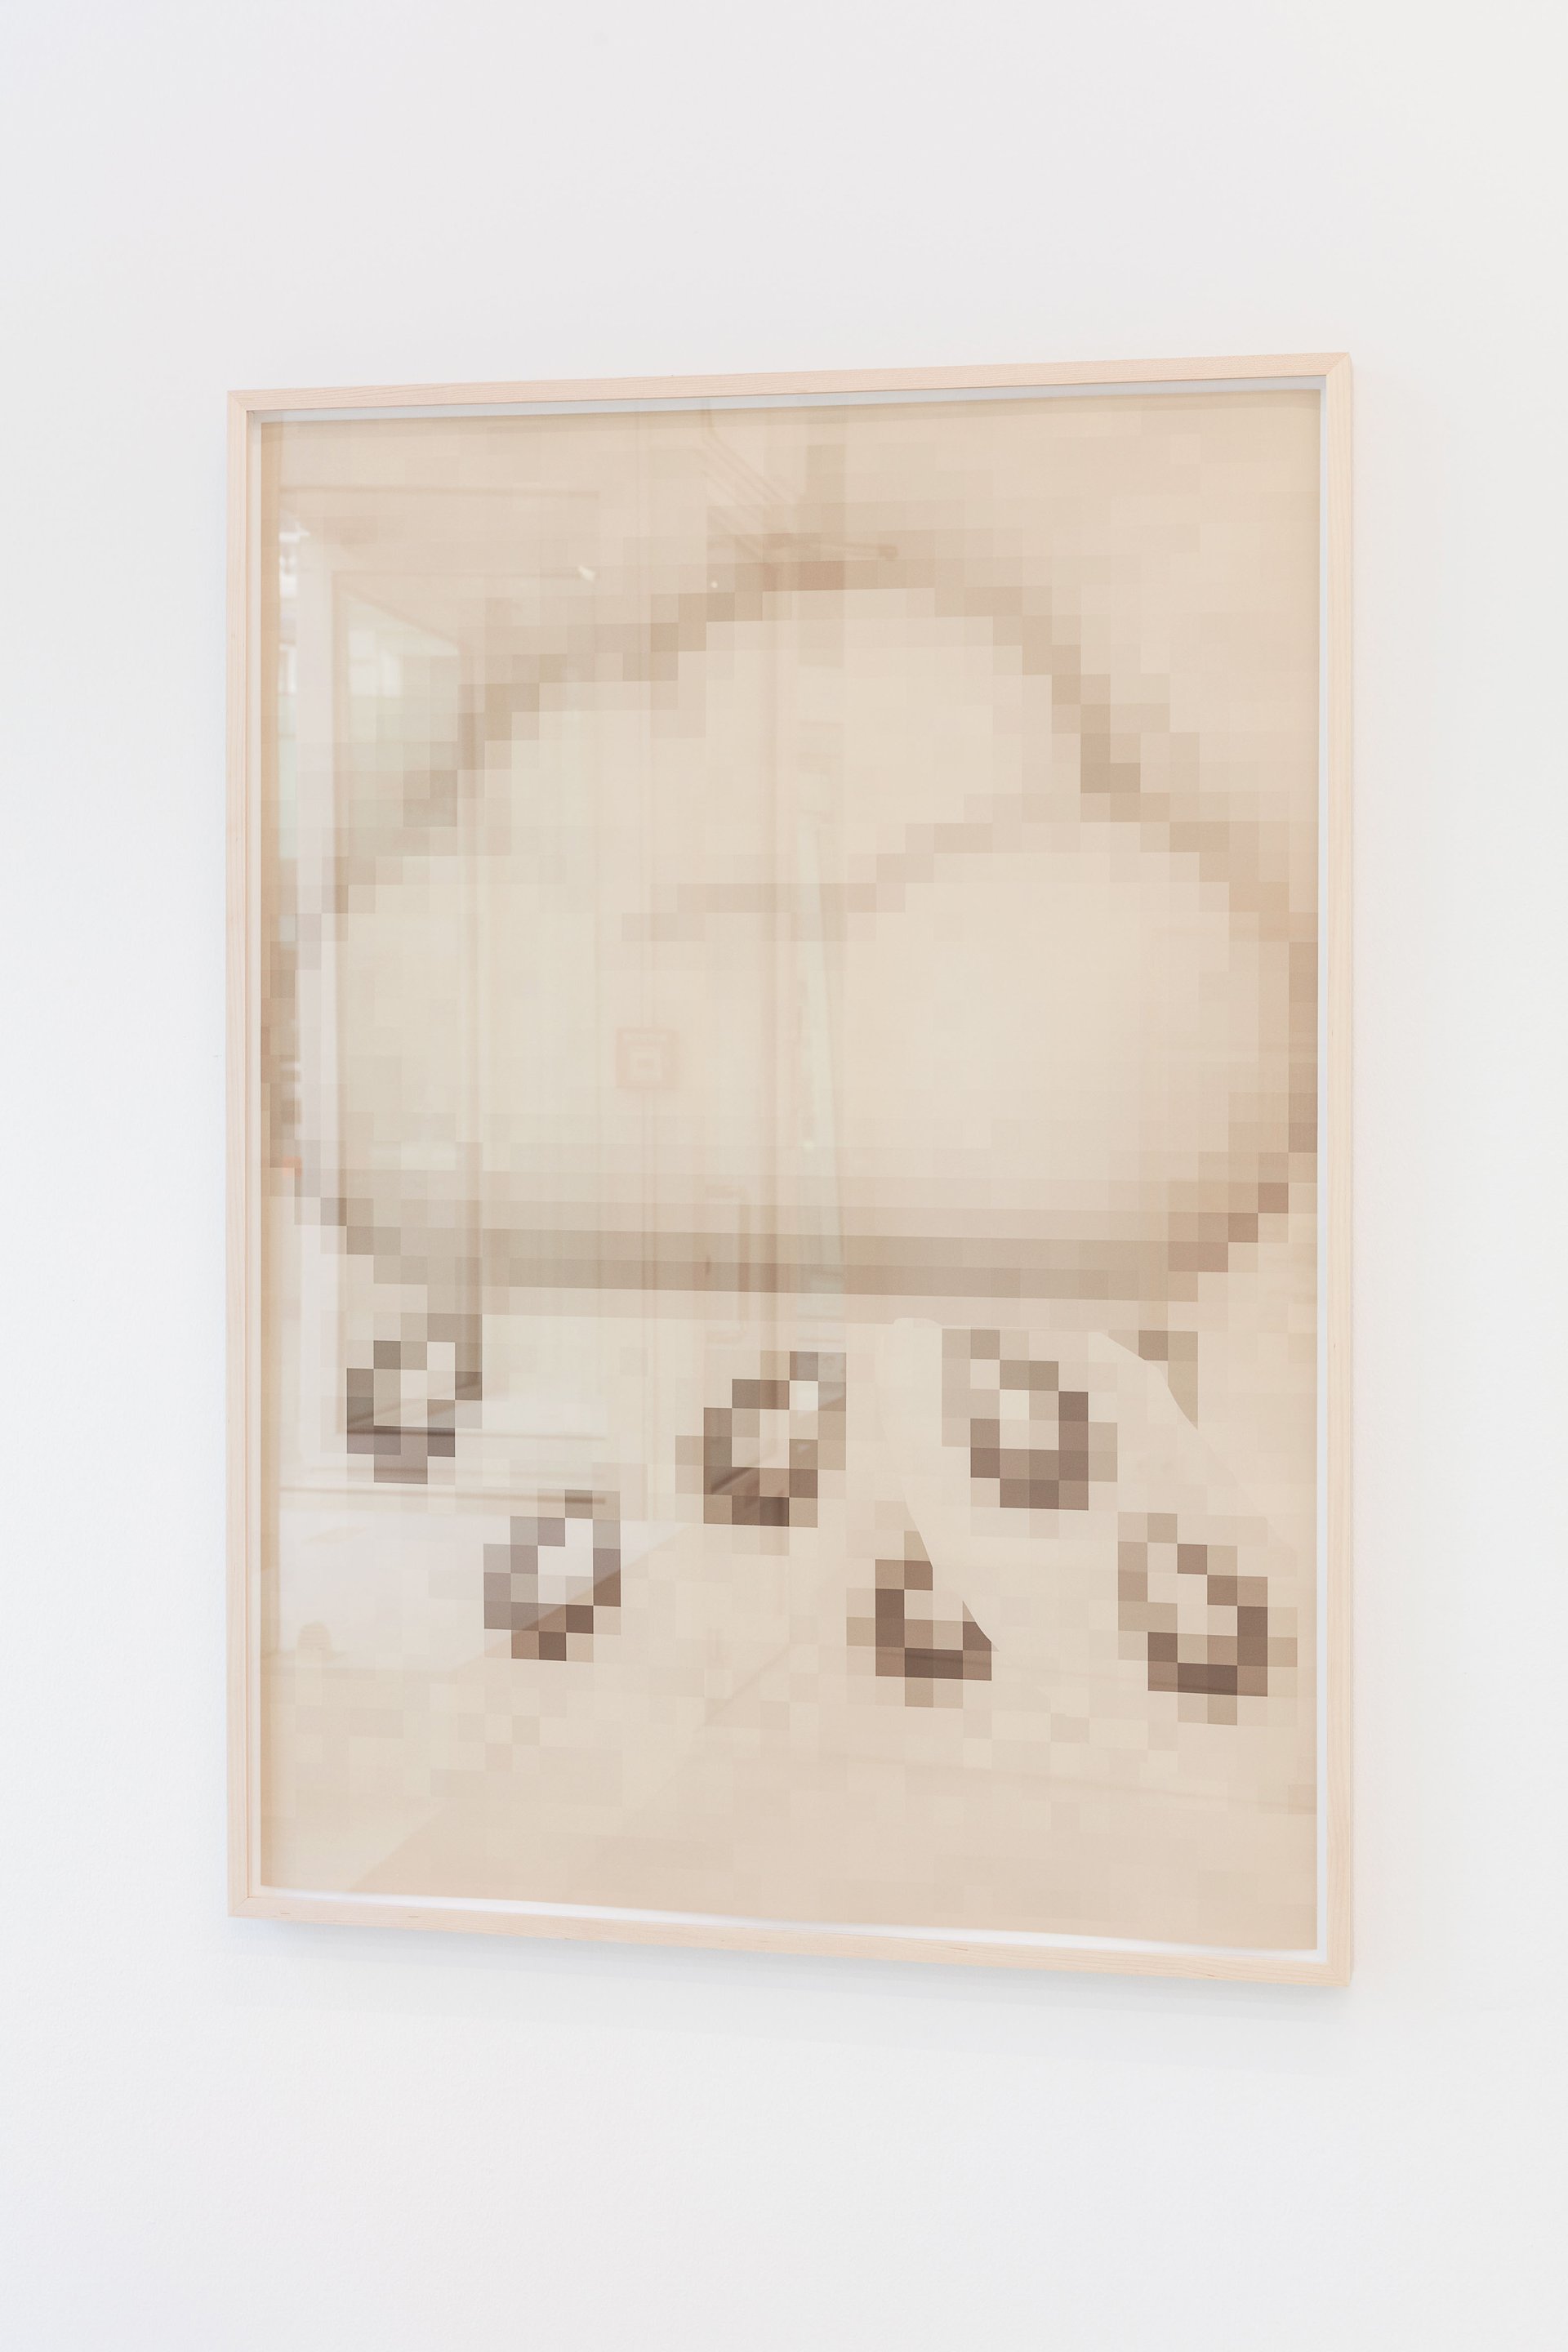 Lisa HolzerRain (beige/brown), 2021Pigment print on cotton paper, black marker on wood110.3 x 80.2 cm,